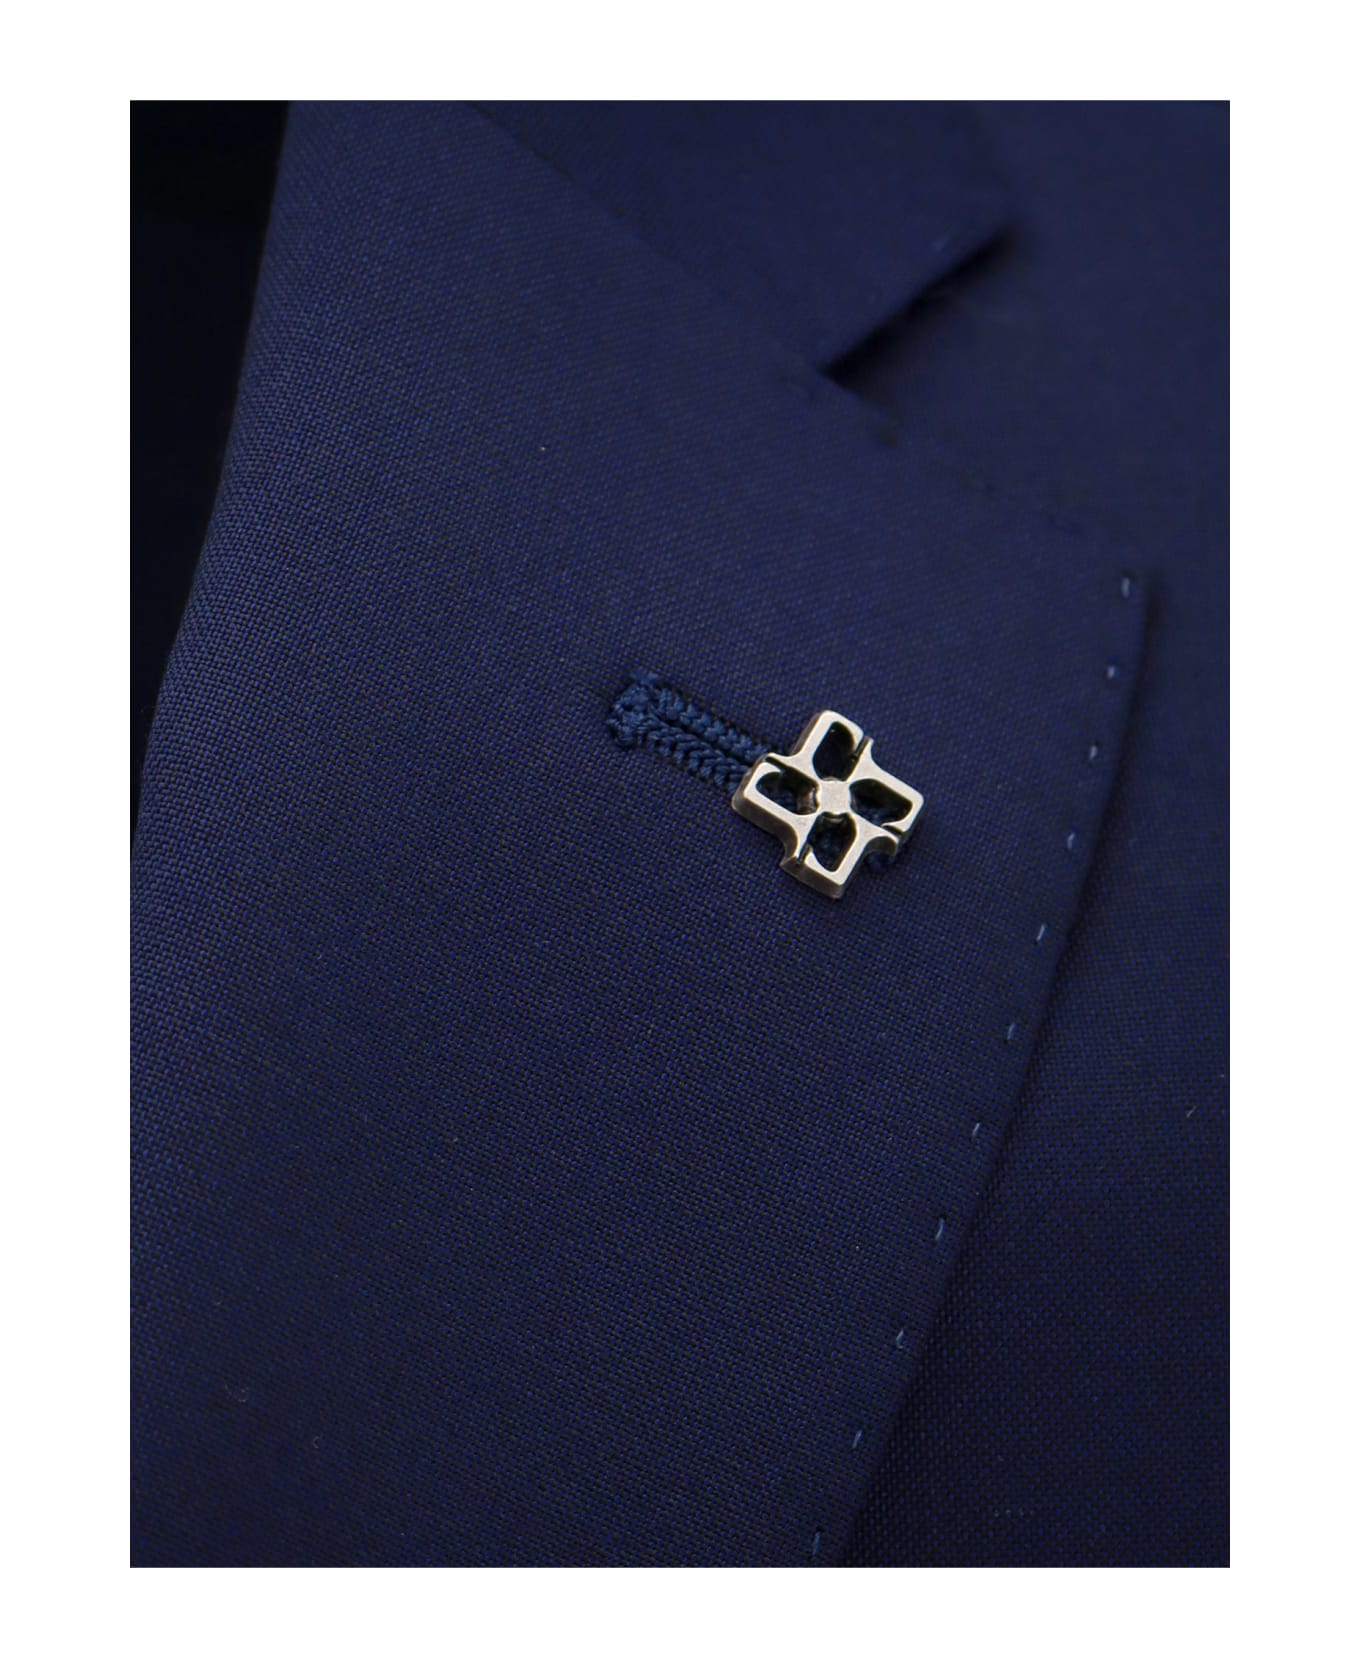 Tagliatore Suit - Blue スーツ